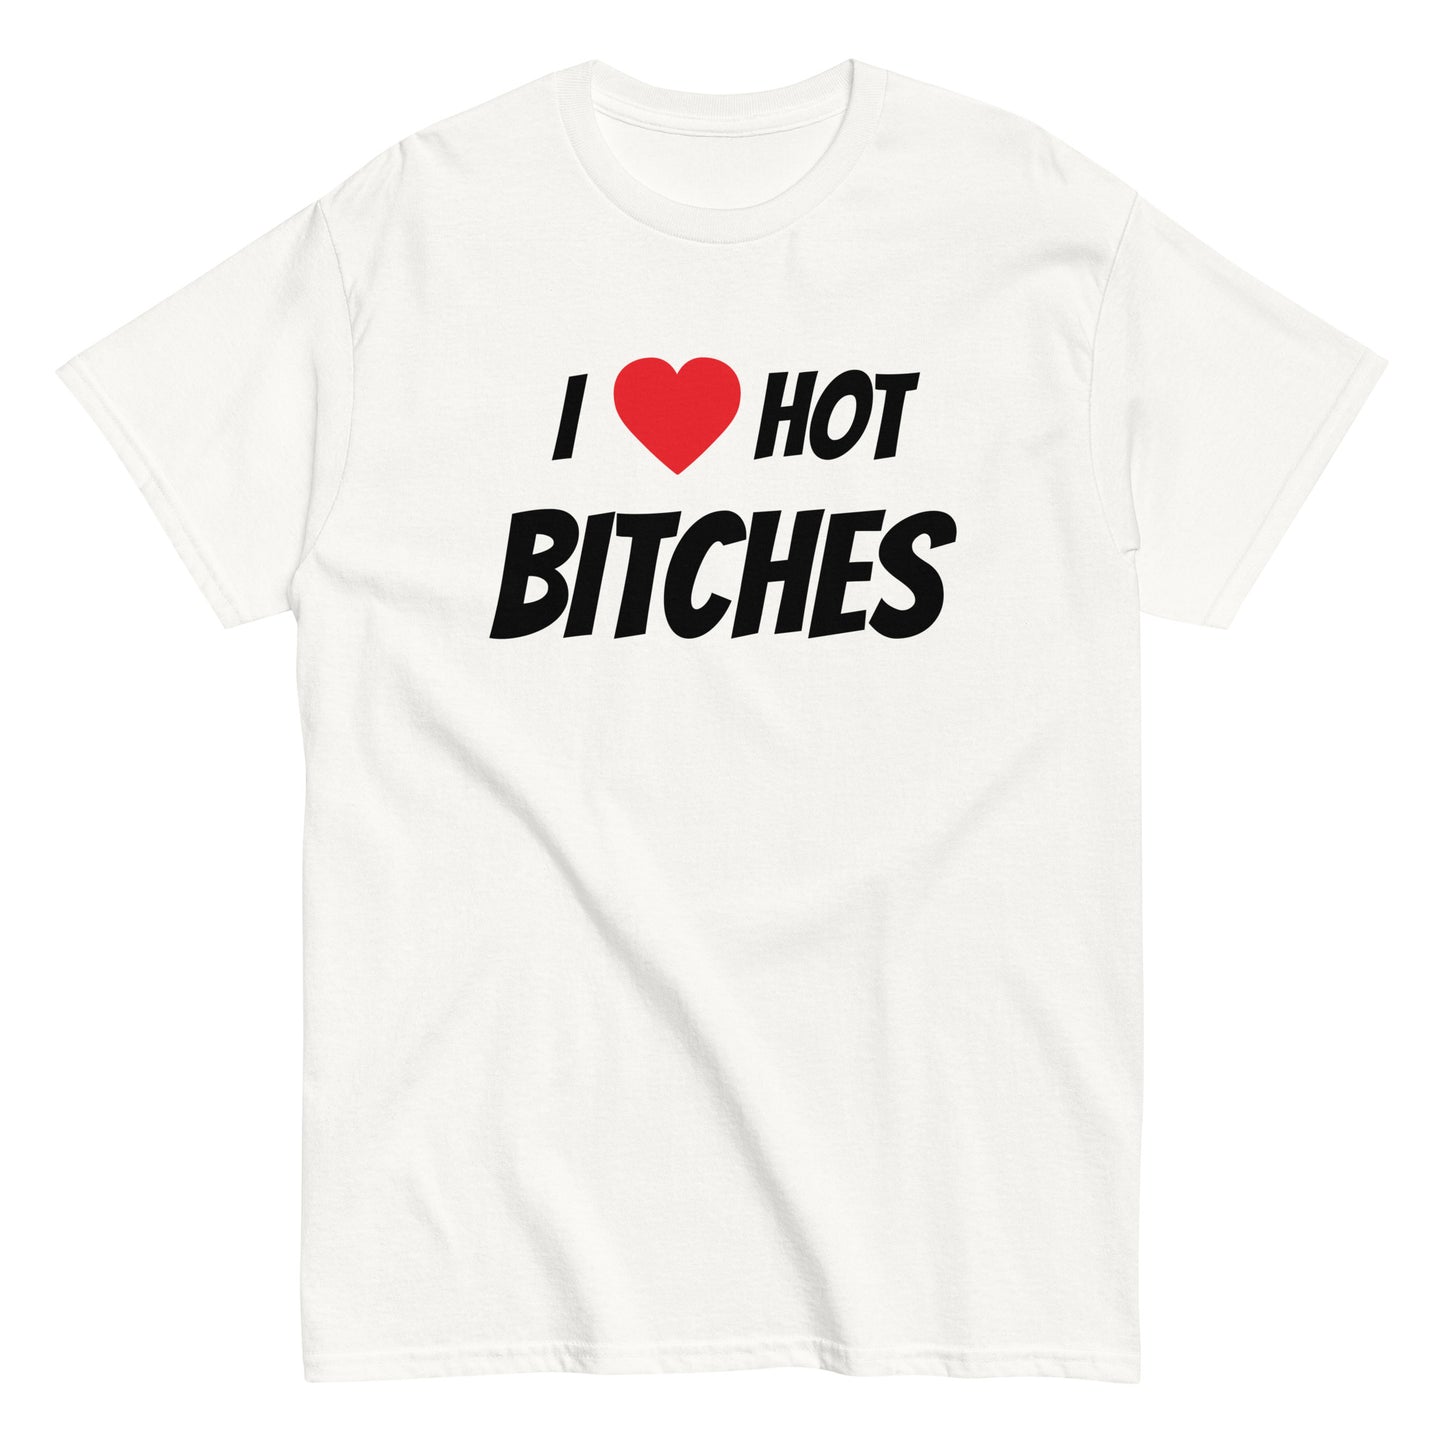 I ❤️ HOT BITCHES T-Shirt